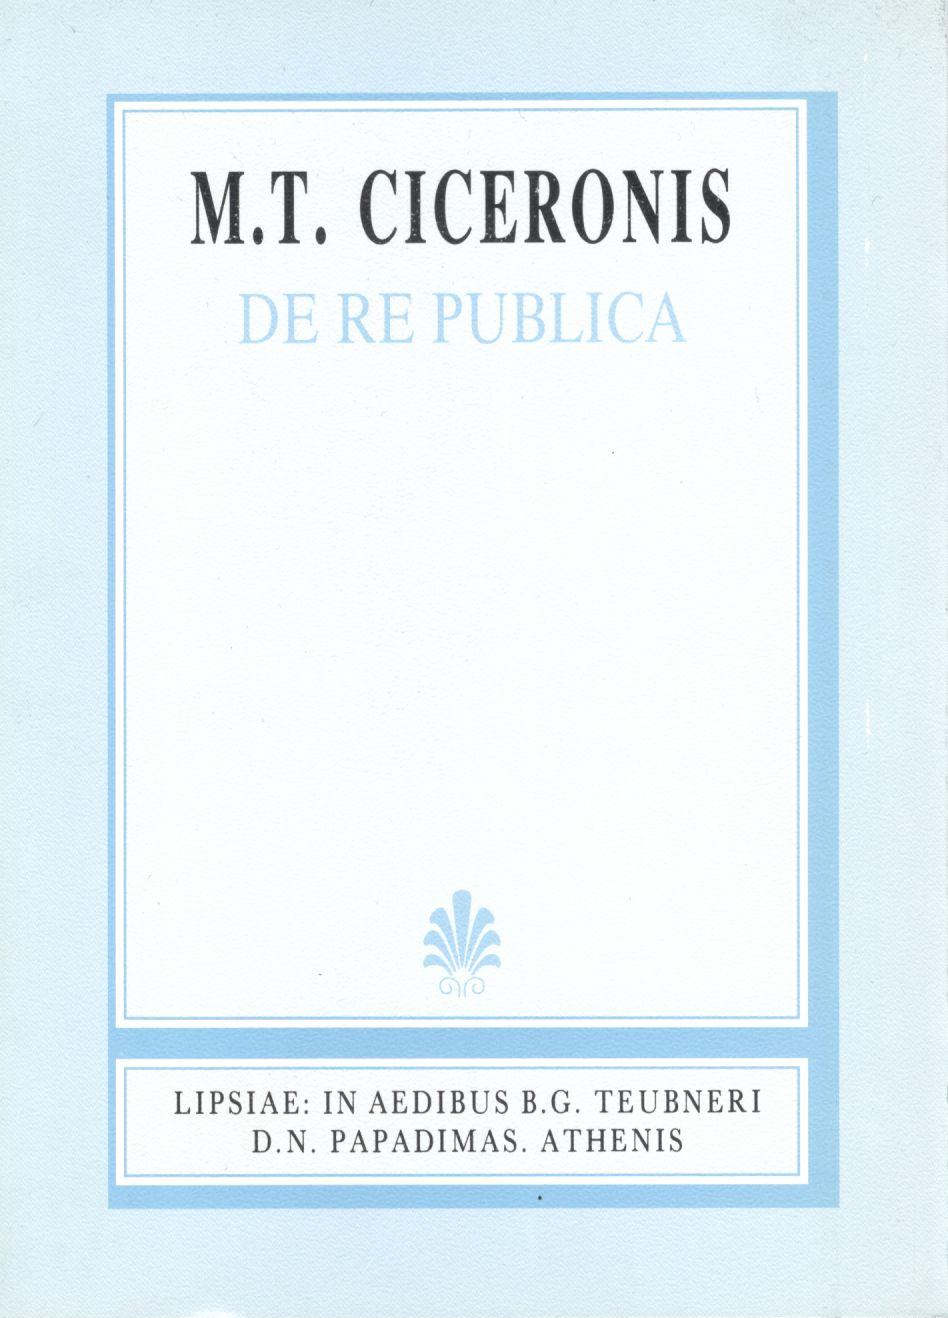 M. T. CICERONIS, DE RE PUBLICA, (ΜΑΡΚΟΥ ΤΥΛΛΙΟΥ ΚΙΚΕΡΩΝΟΣ, ΠΕΡΙ ΠΟΛΙΤΕΙΑΣ)